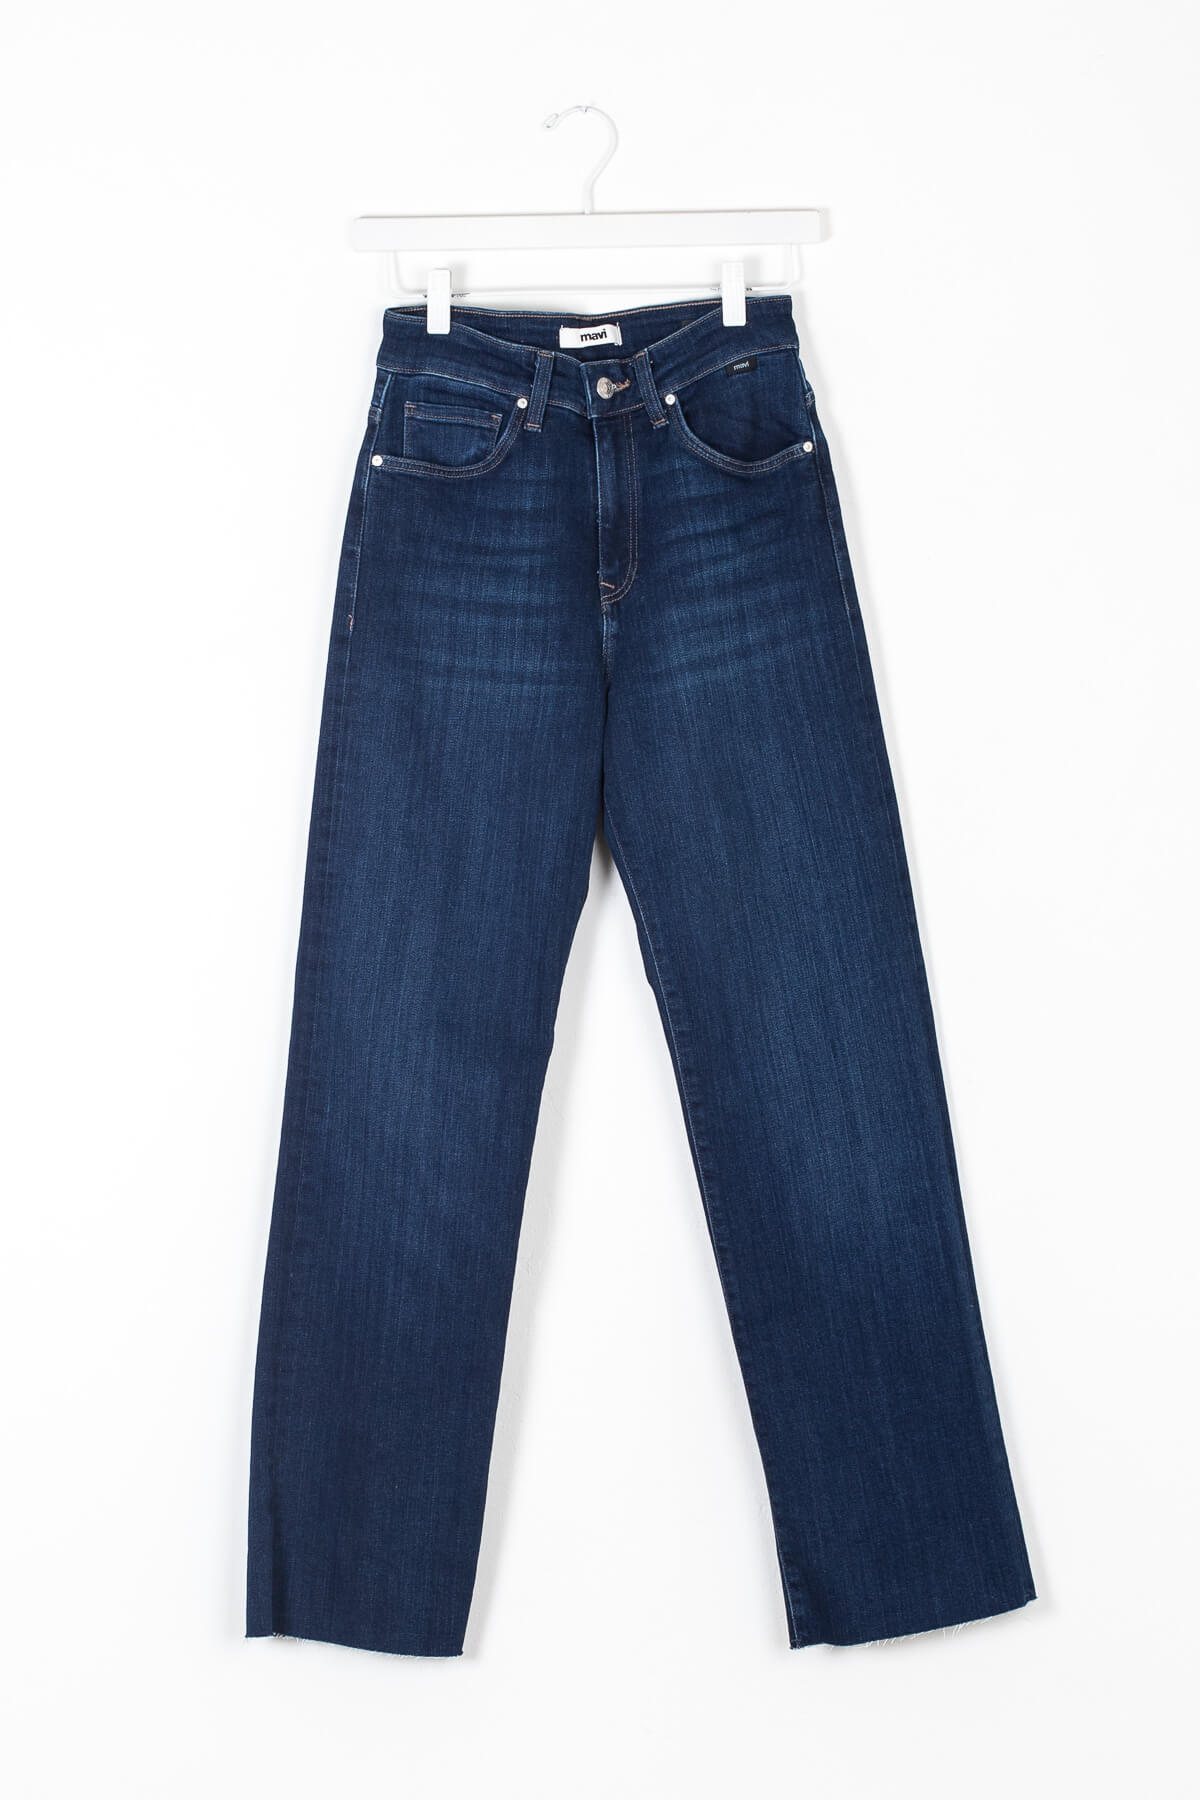 Mavi Barcelona straight jeans